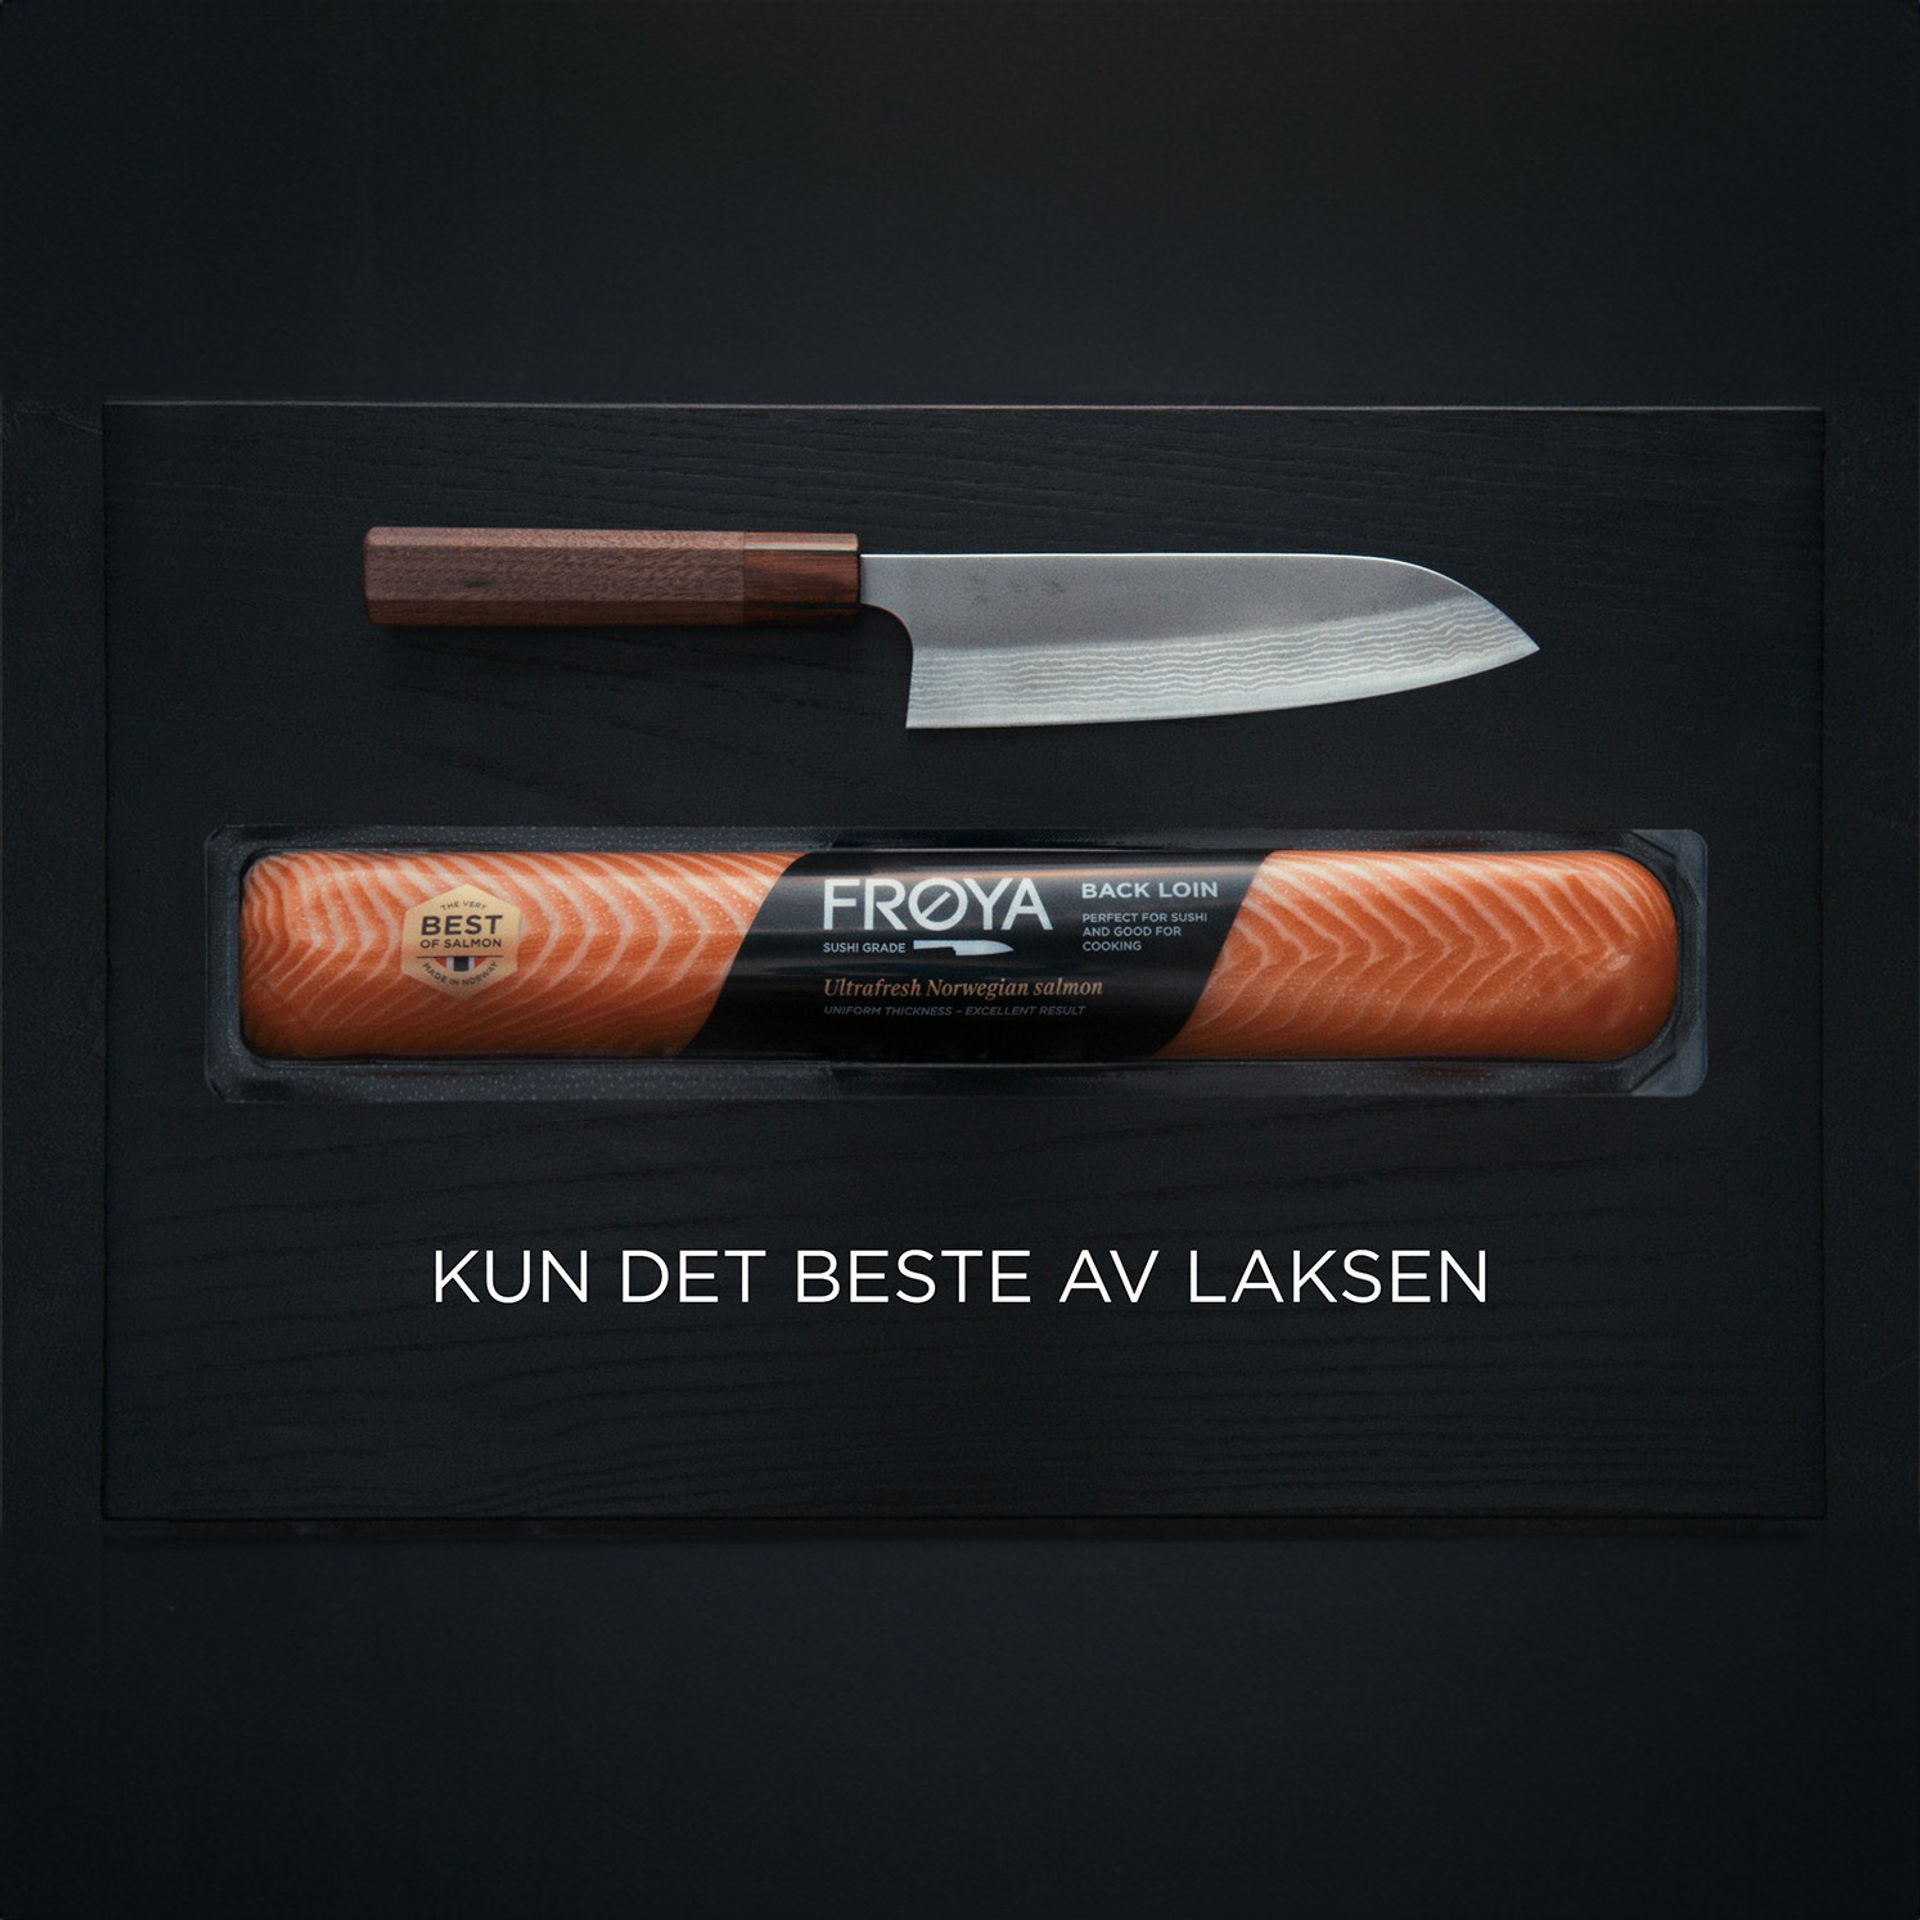 Reklame for Frøya Salmon